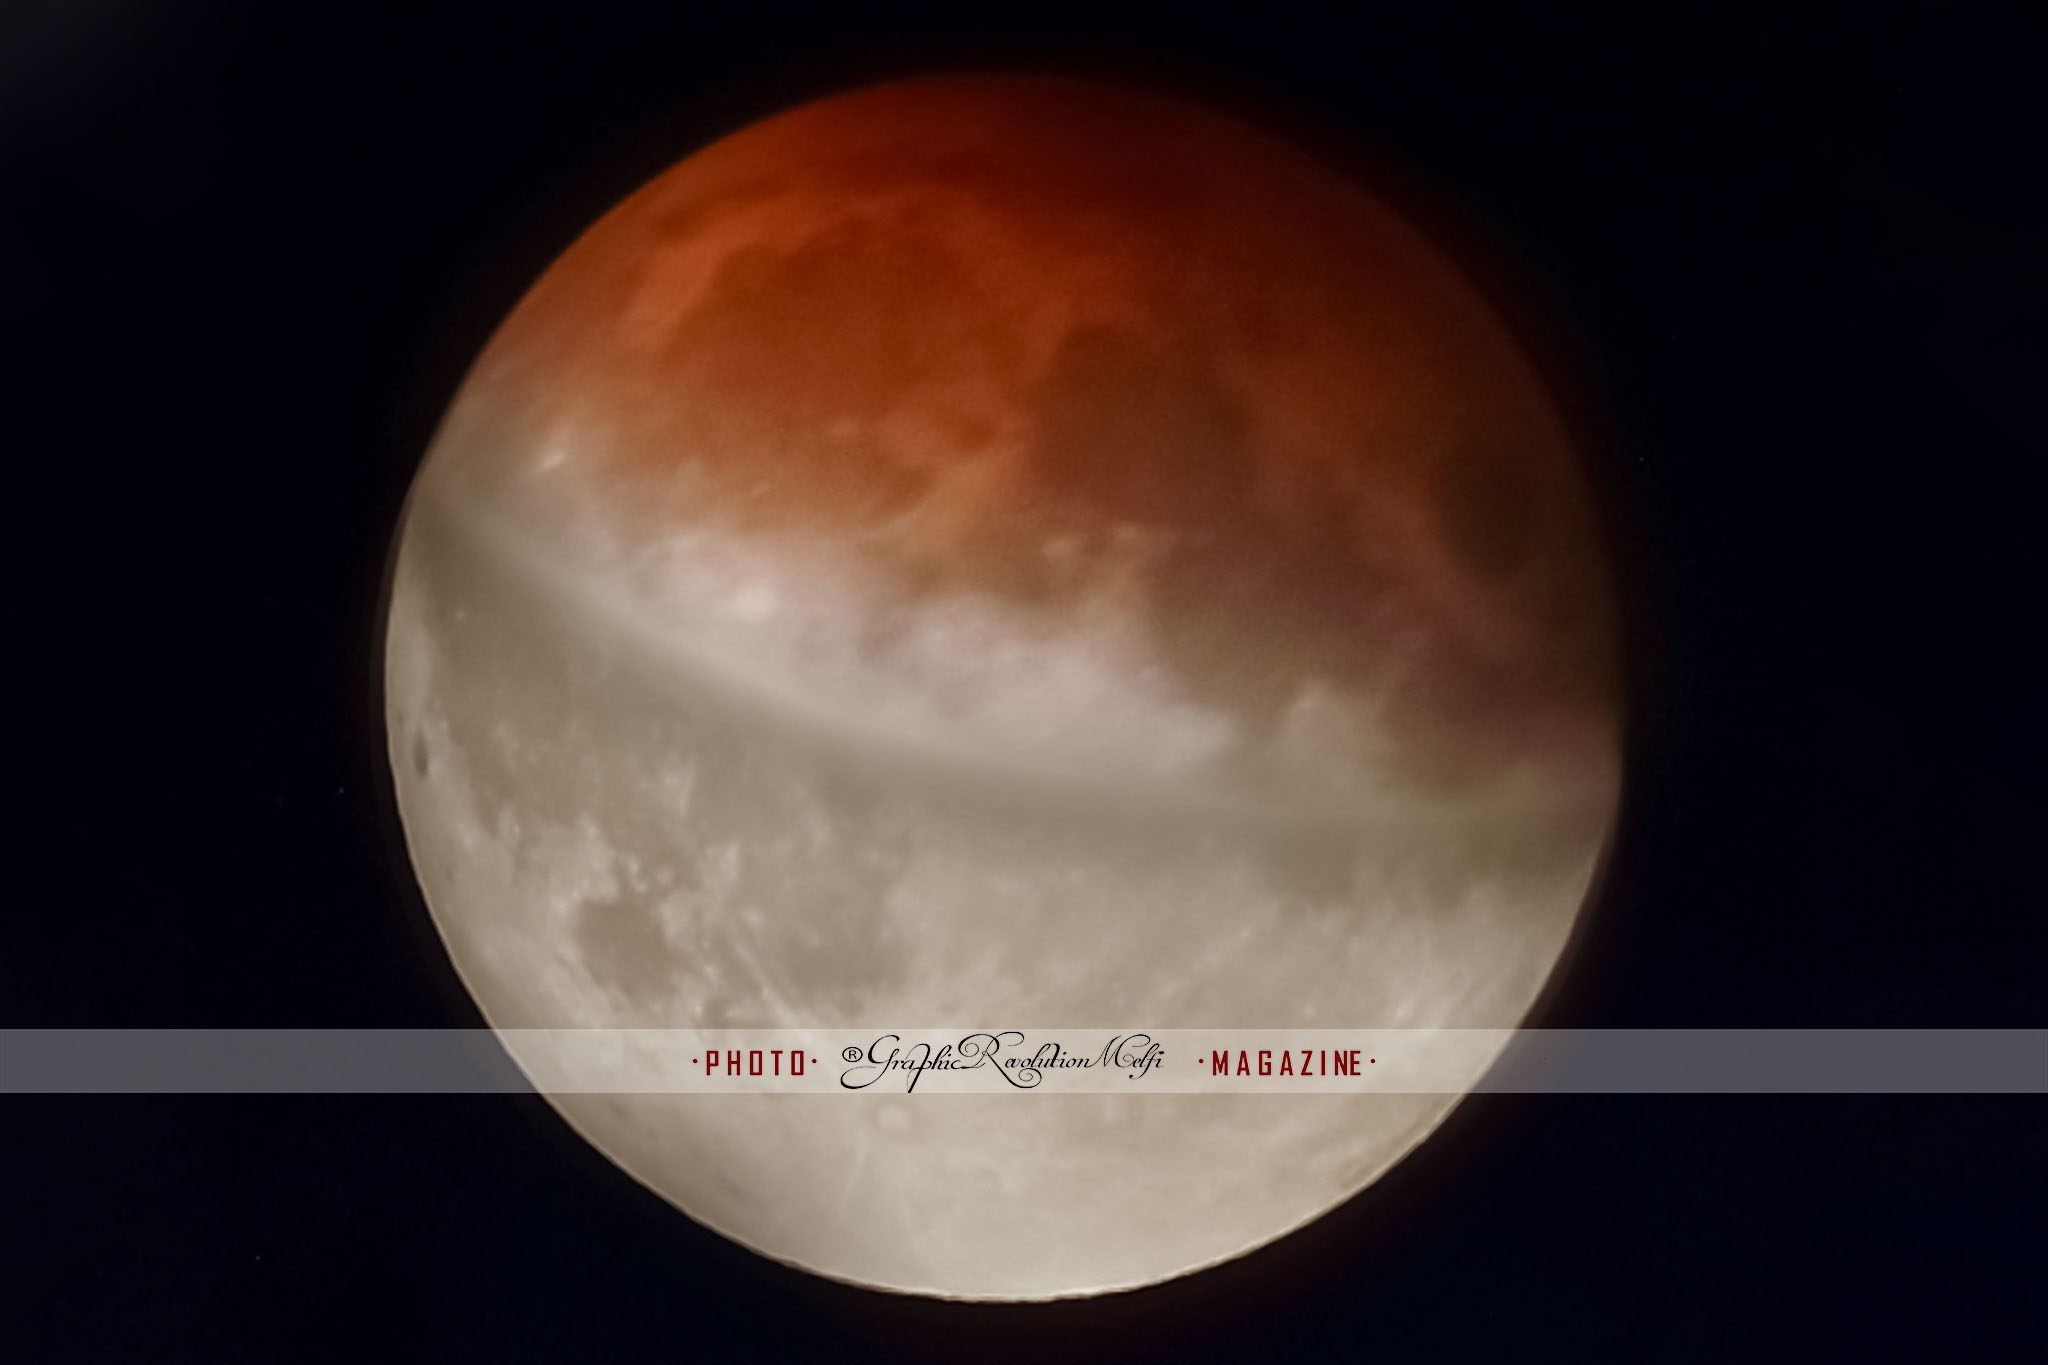 L'eclissi parziale di Luna le foto del 2019 da melfi